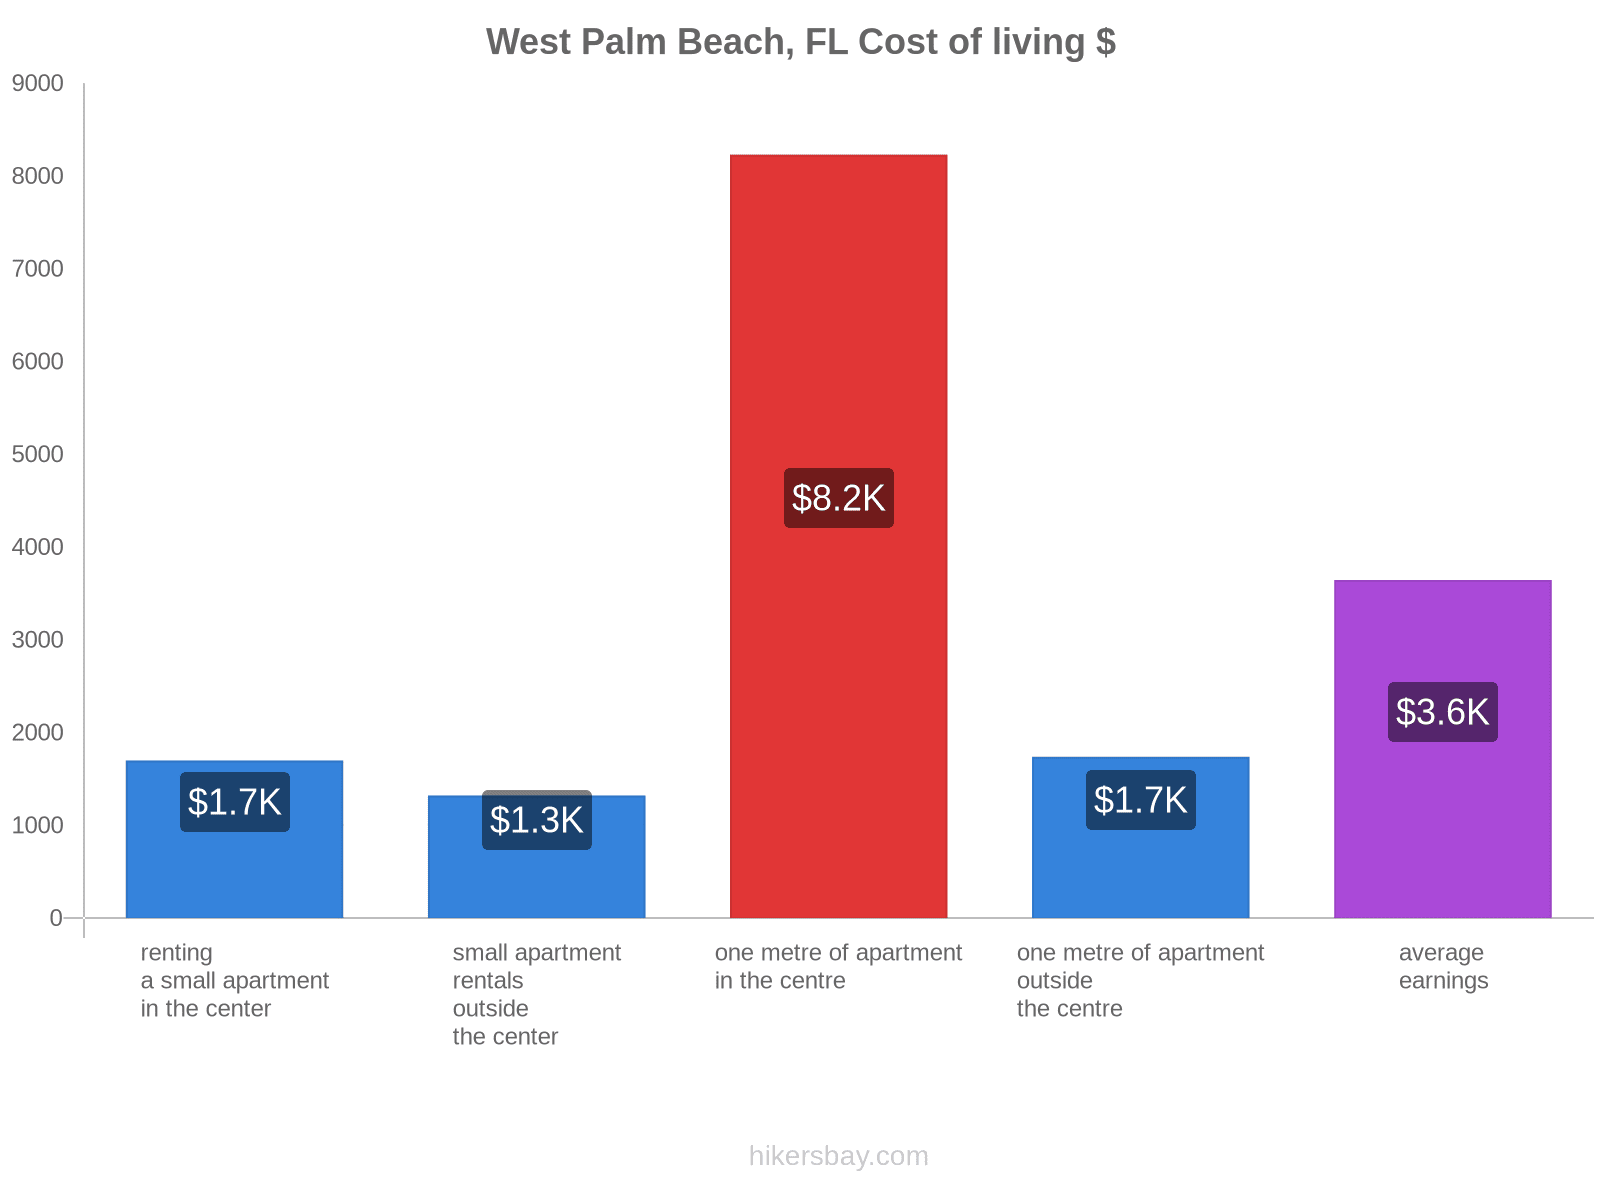 West Palm Beach, FL cost of living hikersbay.com